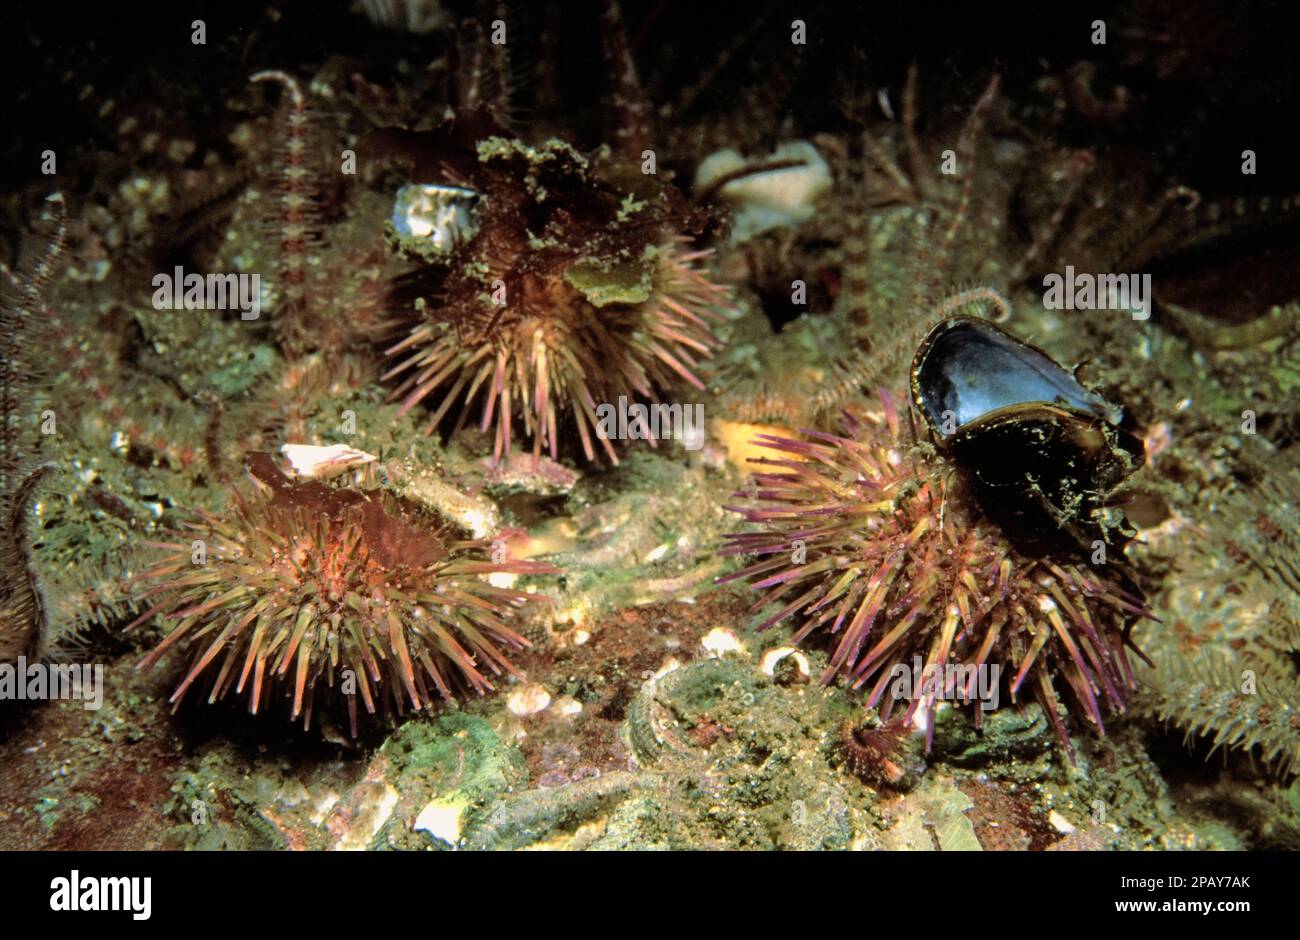 Green sea urchin (Psammechinus miliaris) three decorated with shells and seaweed, UK. Stock Photo